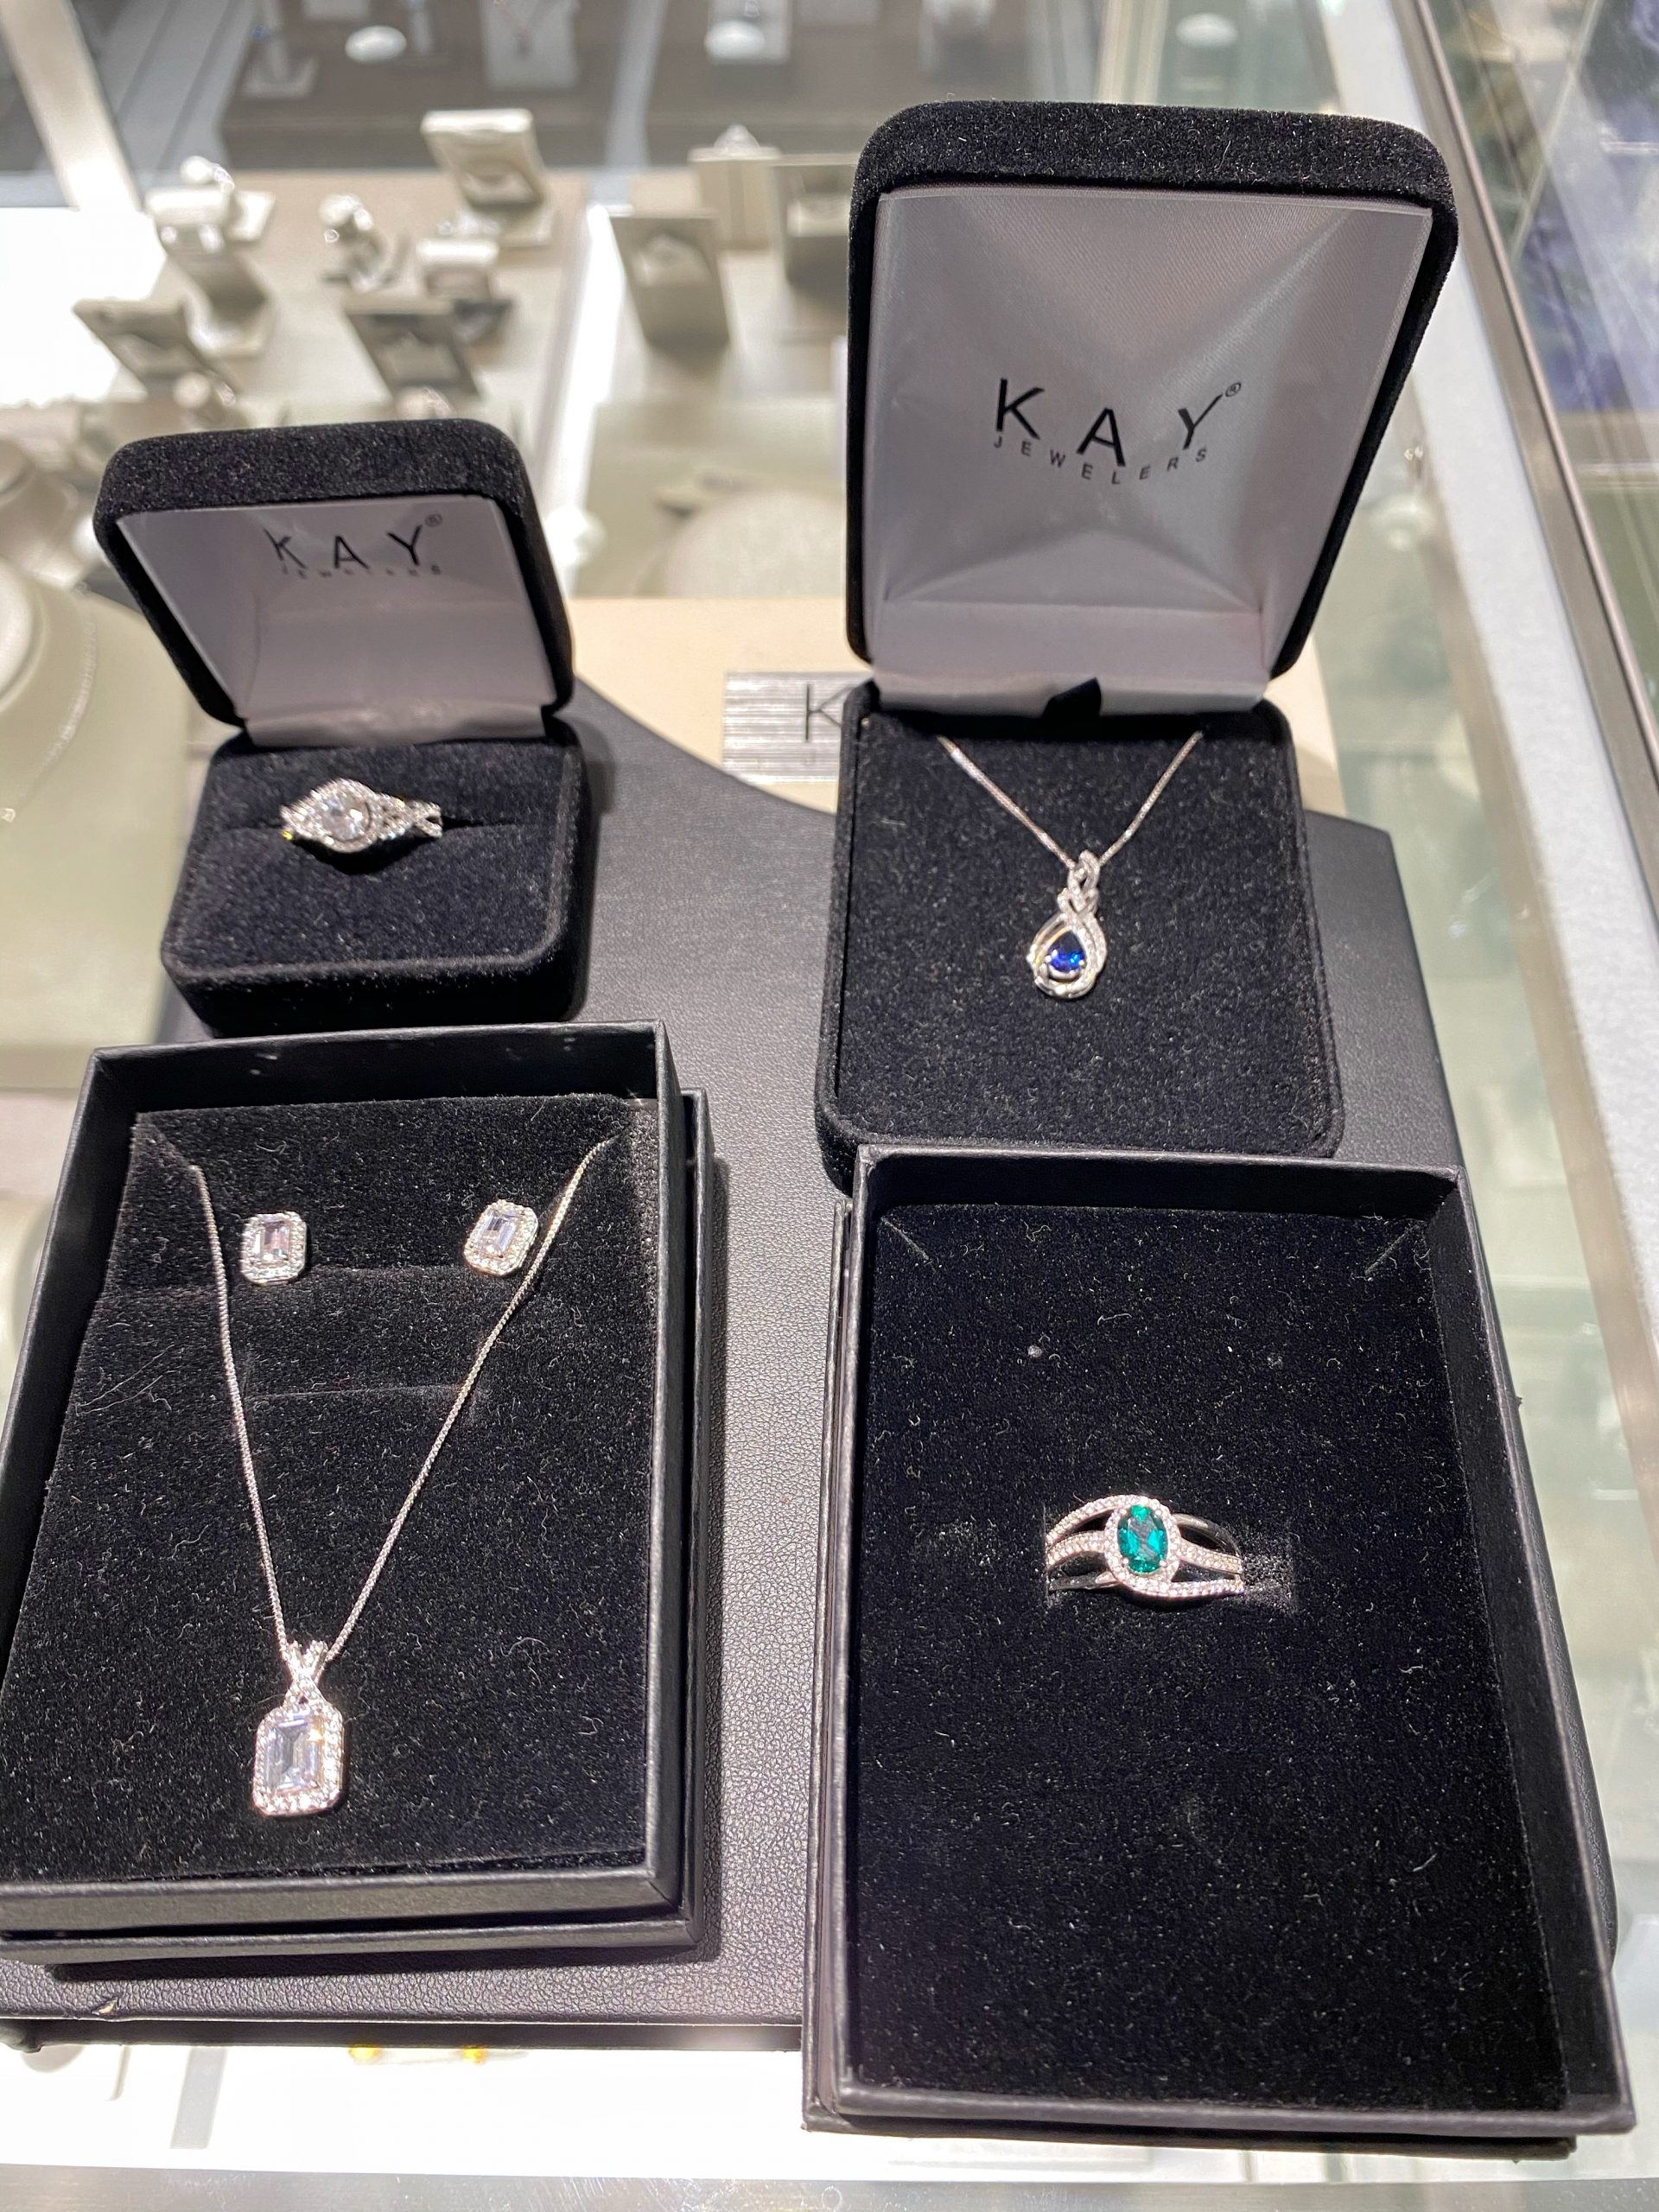 Kay Jewelers 24.99 Specials